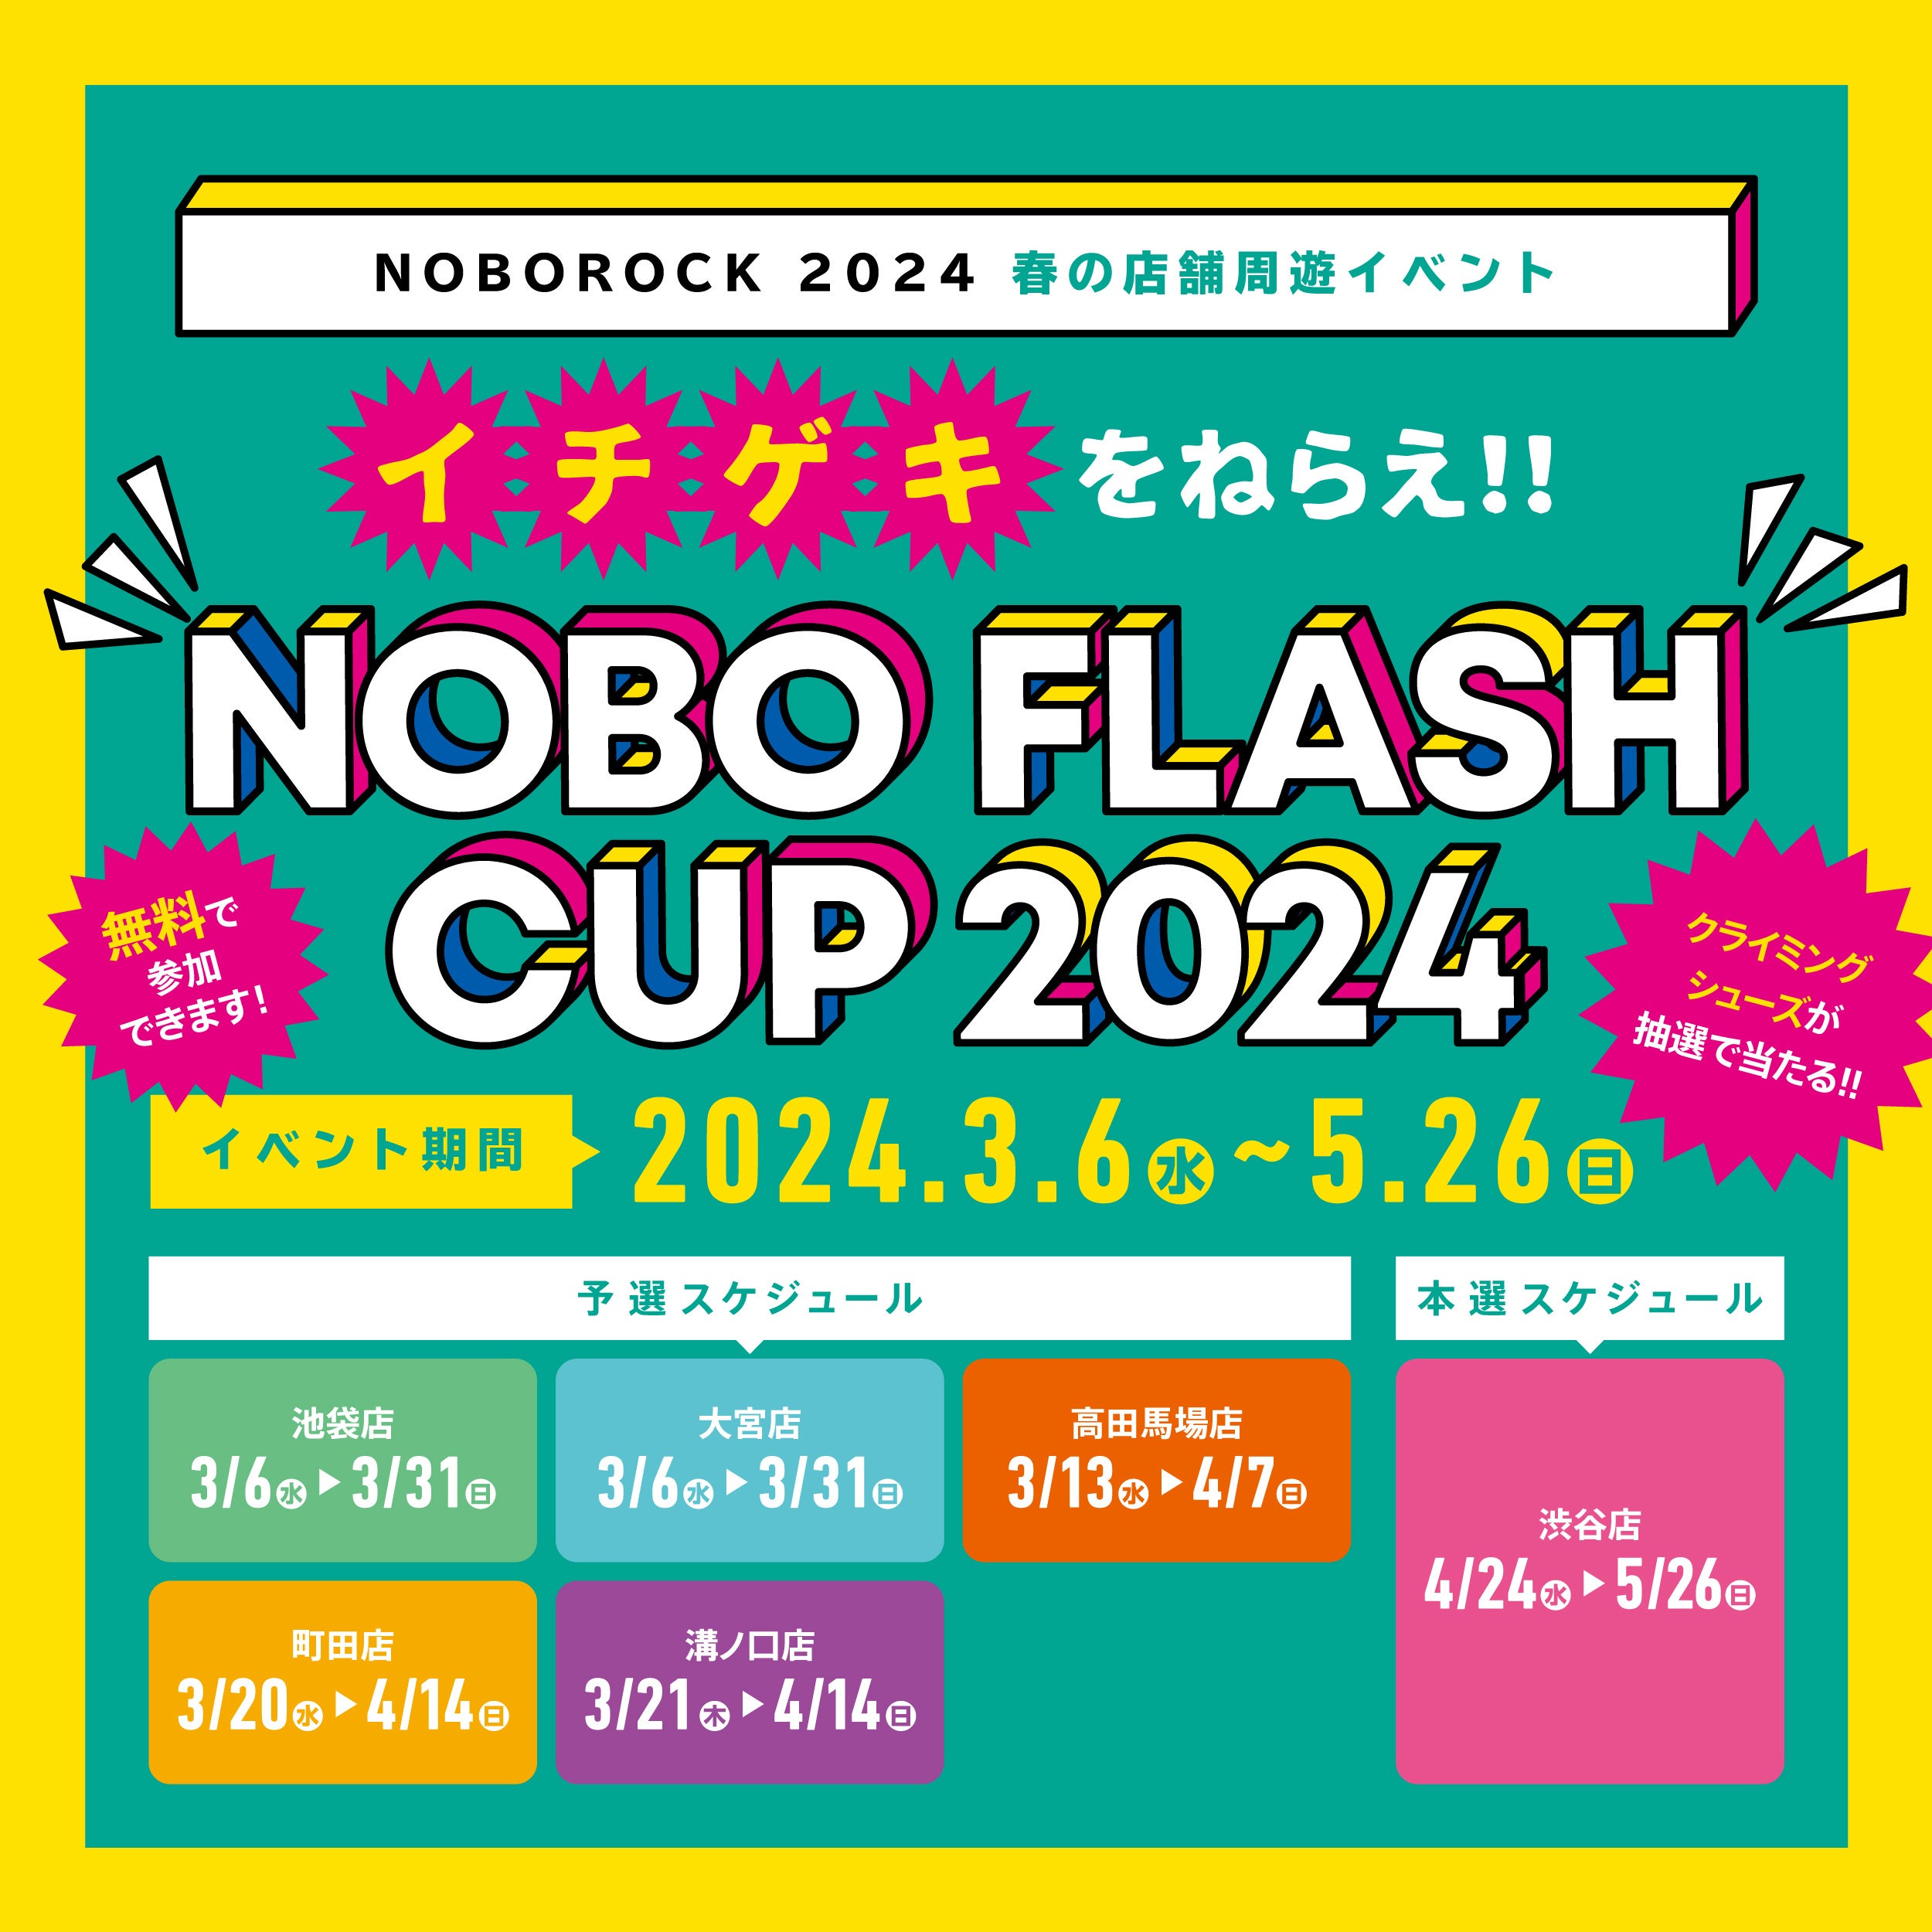 NOBO FLASH CUP 2024 - u[hEIuEUEEH[vNOBOROCK̃R{[VCxg36J